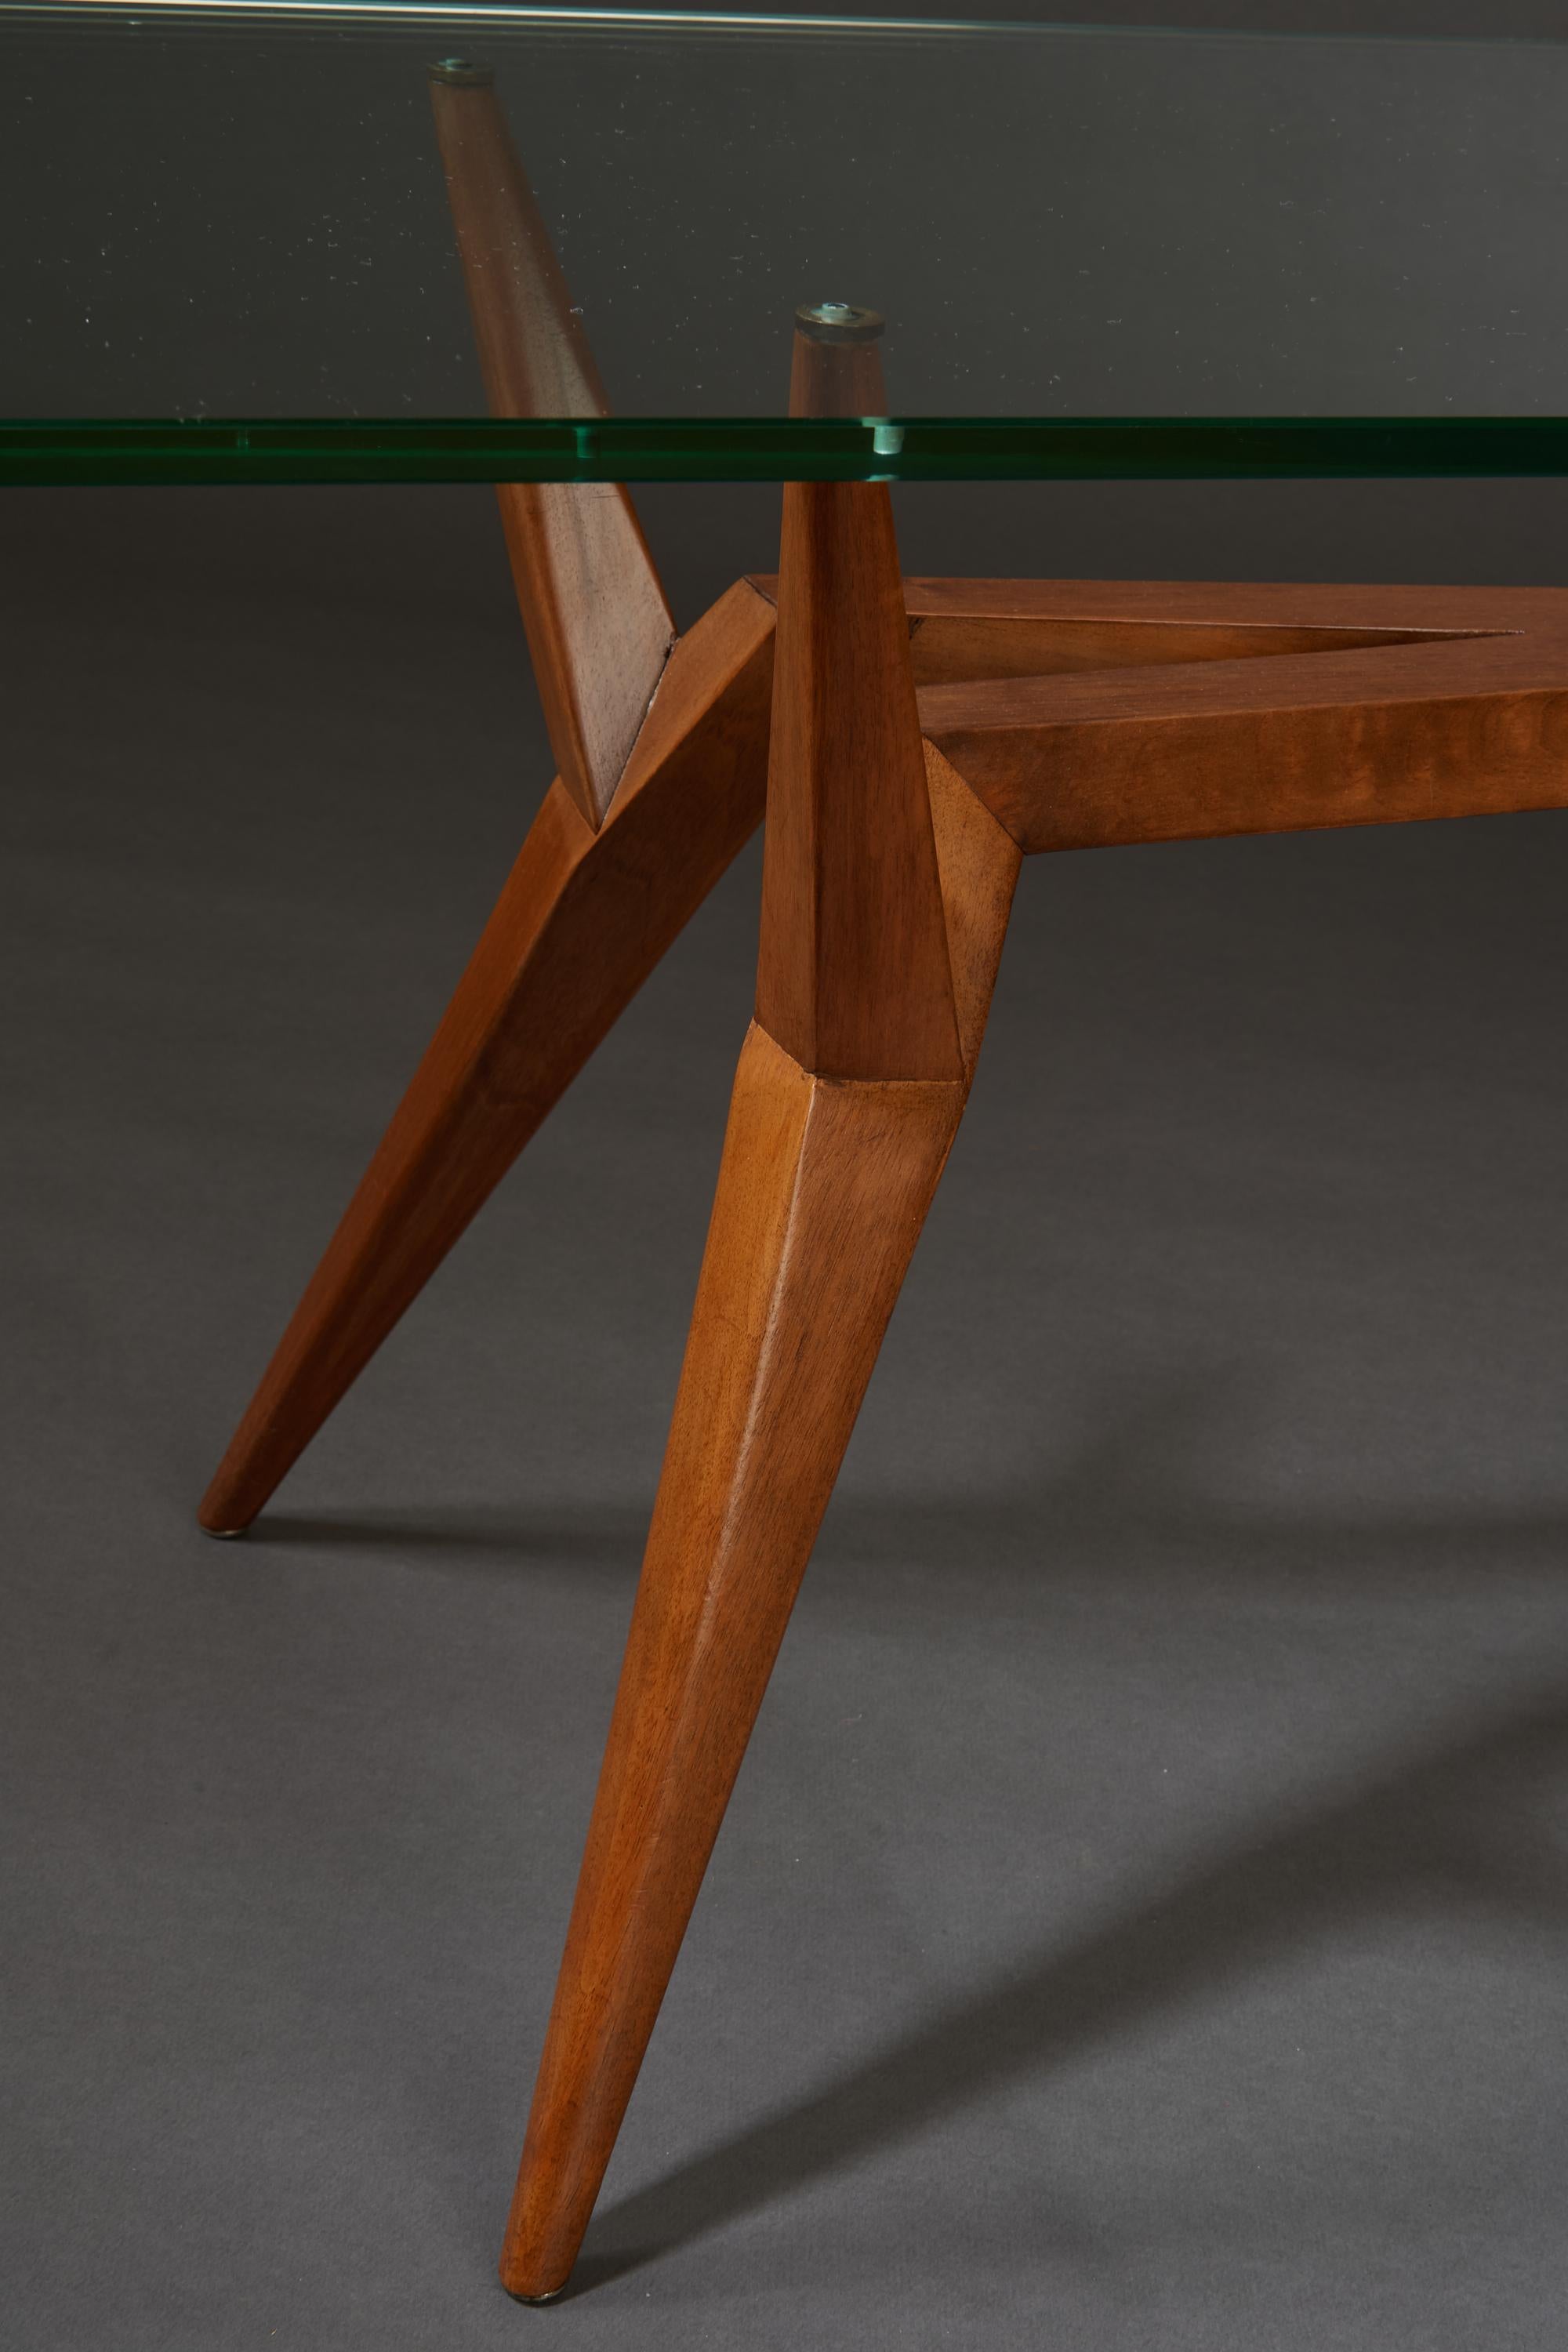 Pierluigi Giordani Rare Constructivist Coffee Table in Wood & Glass, Italy 1950s For Sale 1